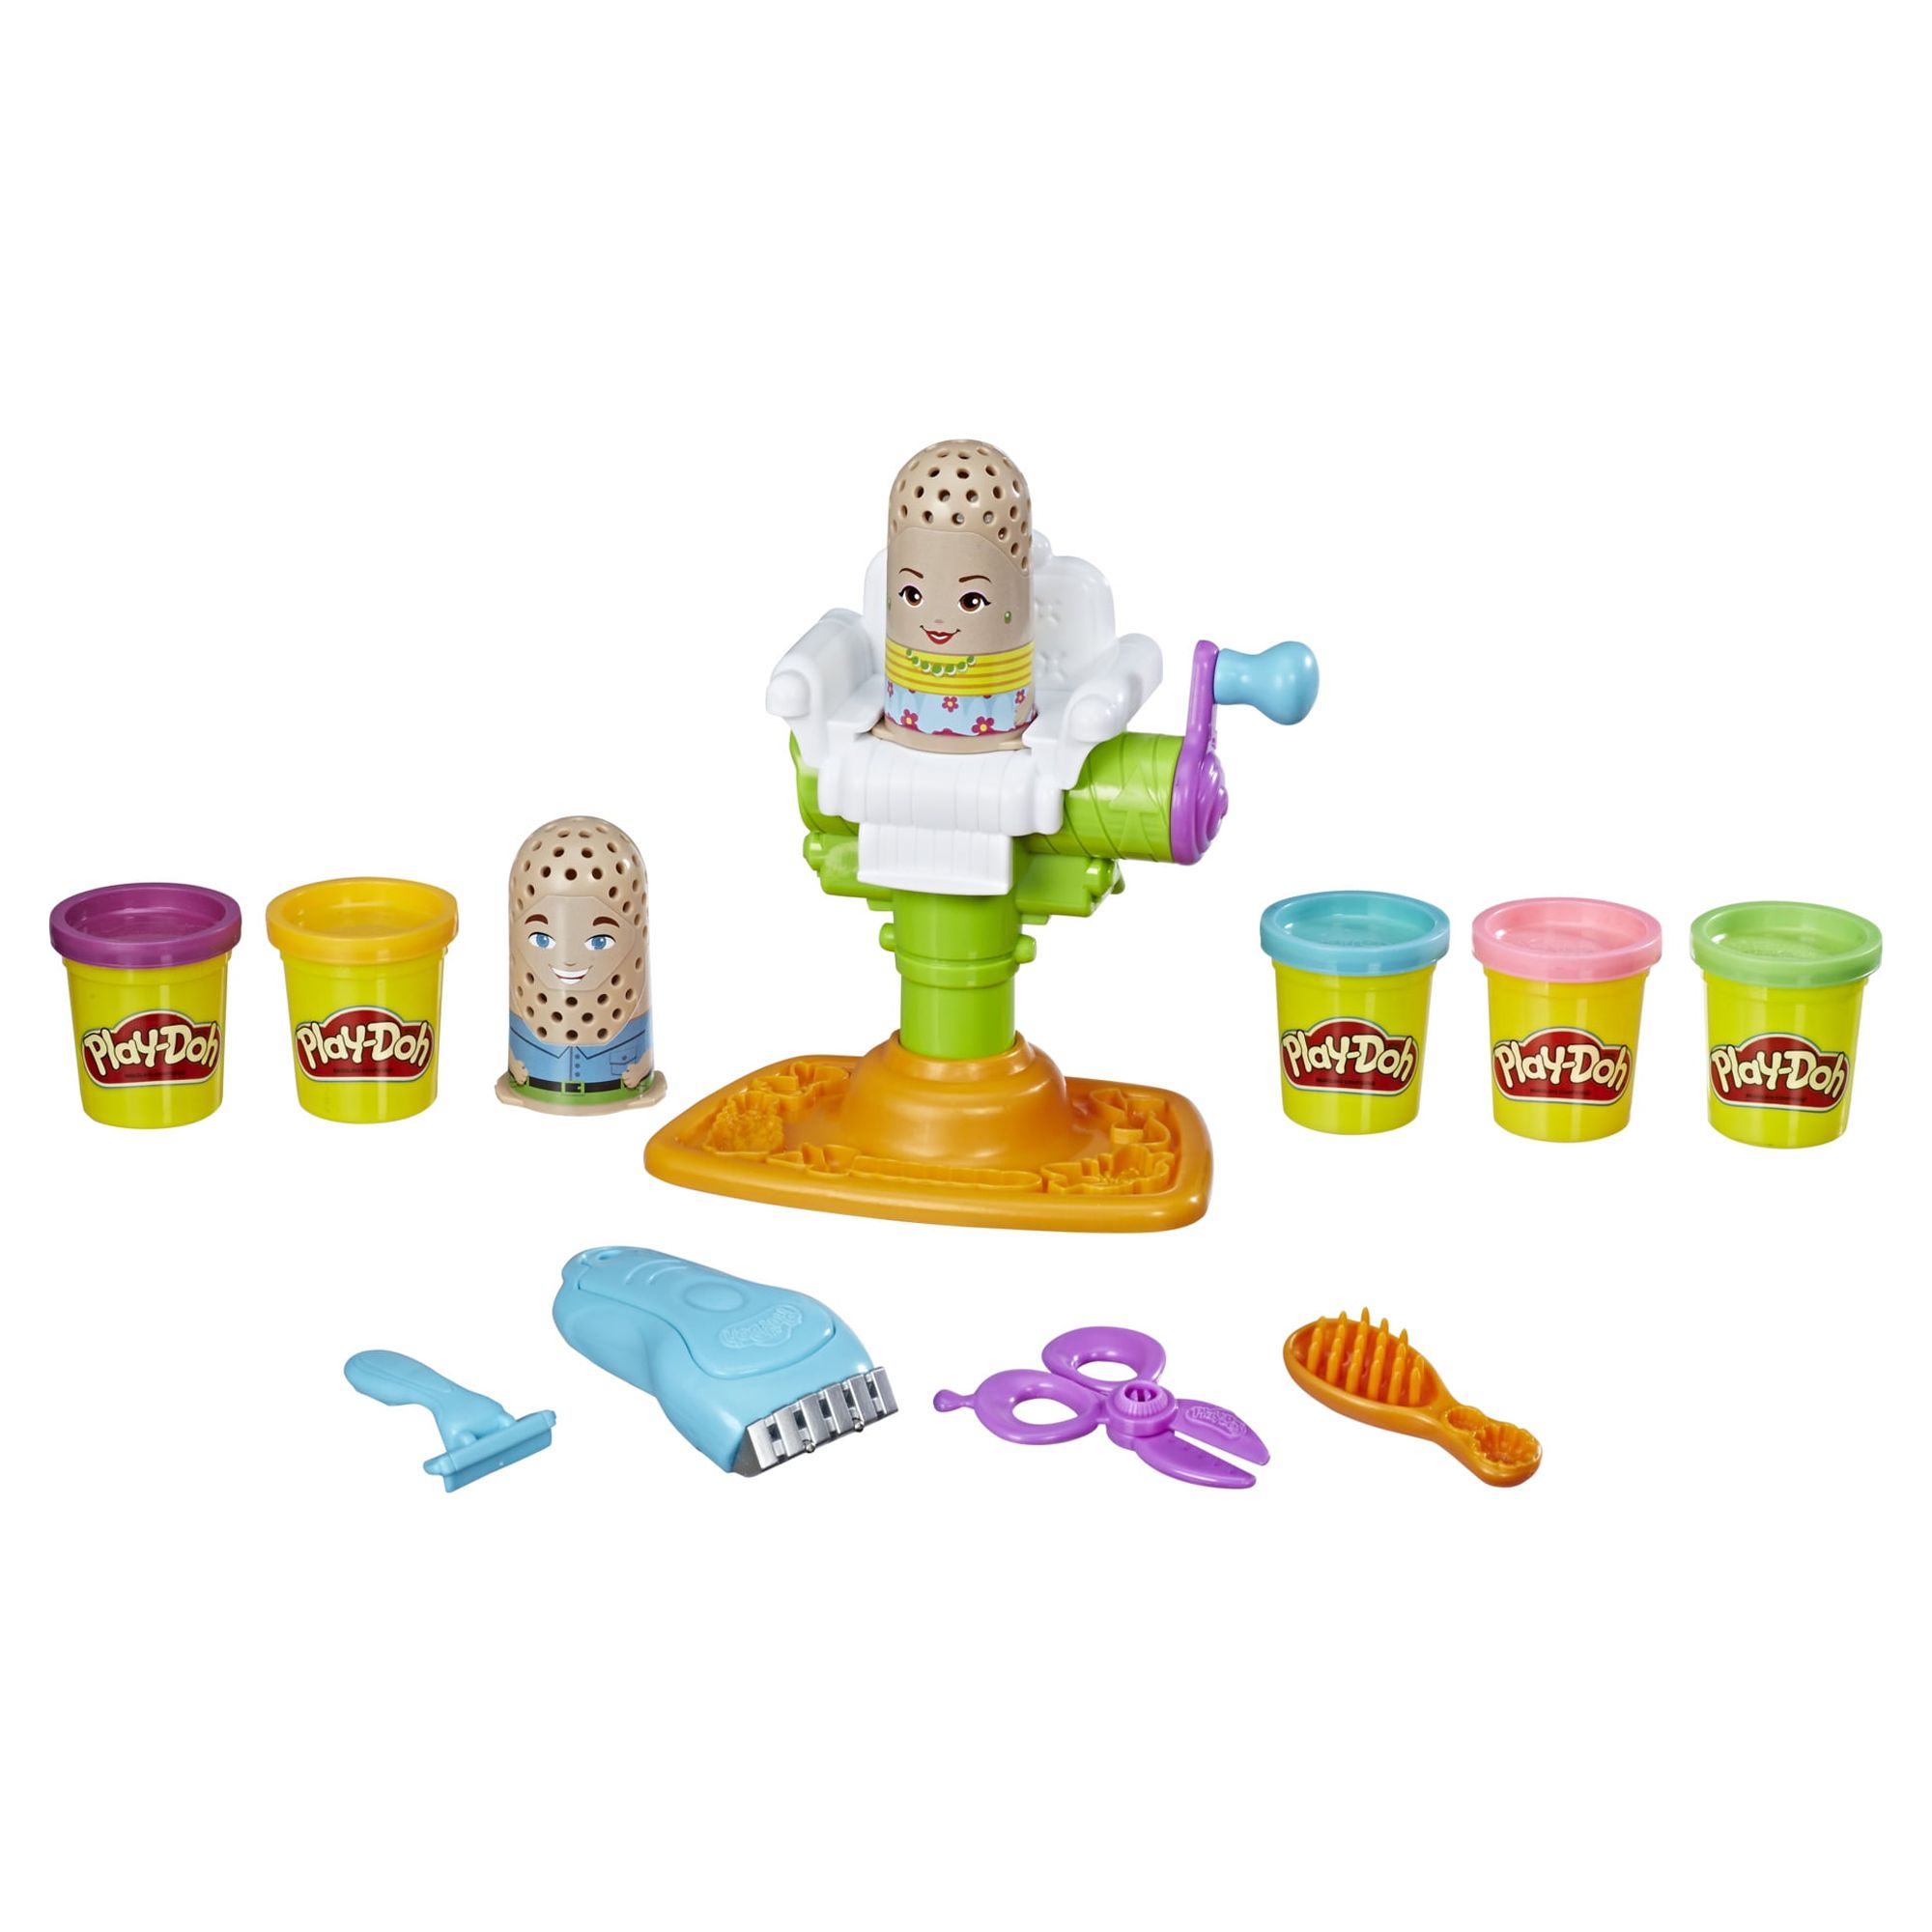 Play-Doh Buzz 'n Cut Barber Shop Set - image 1 of 5